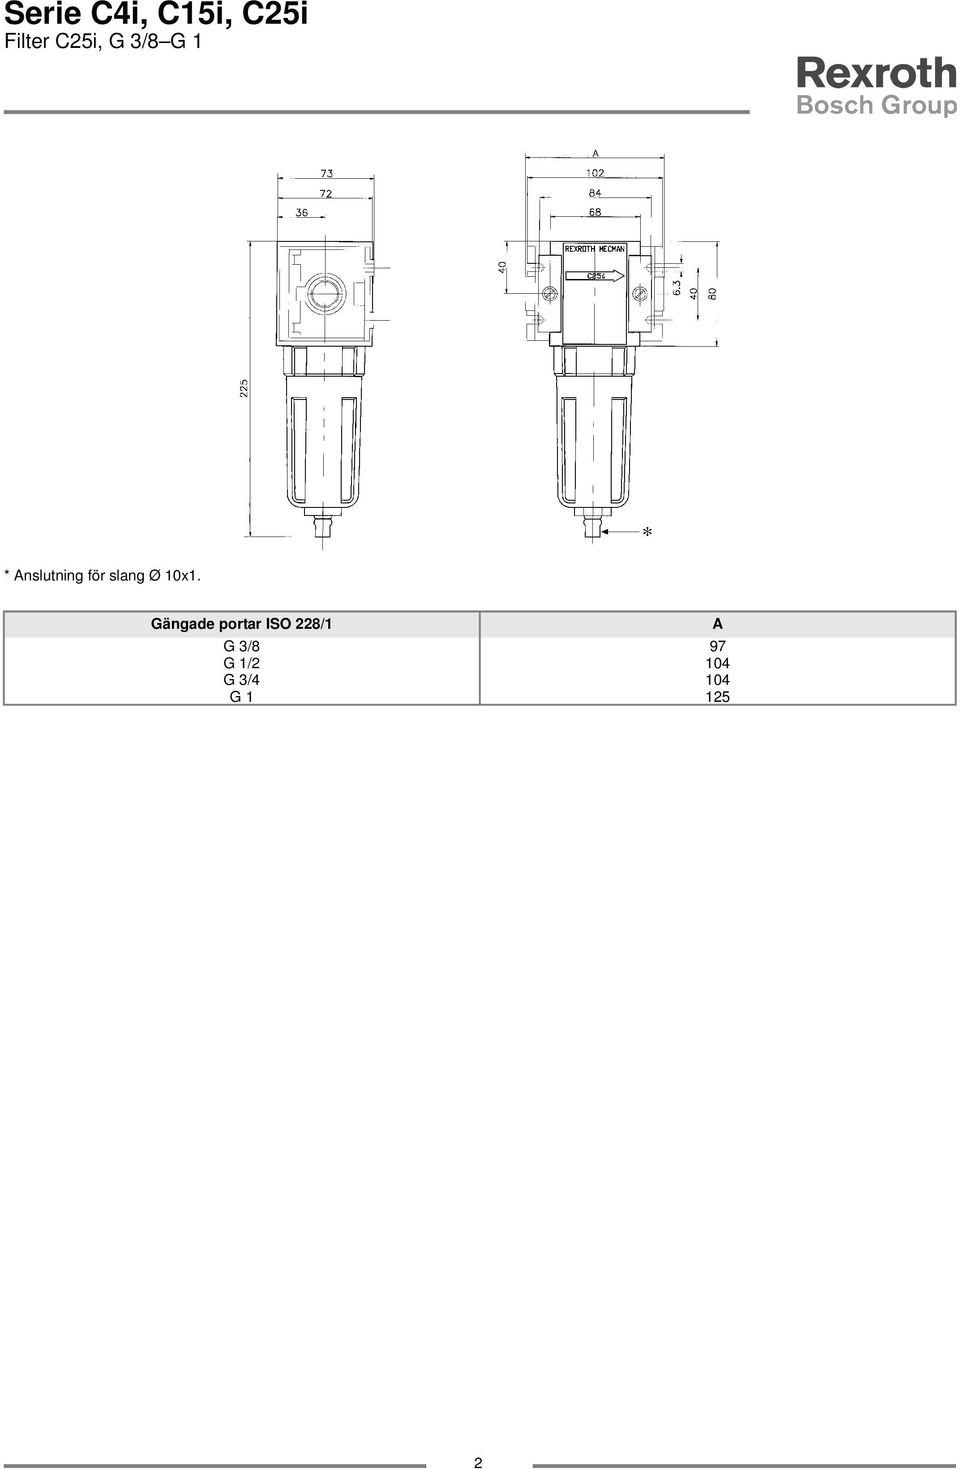 Gängade portar ISO 228/ A